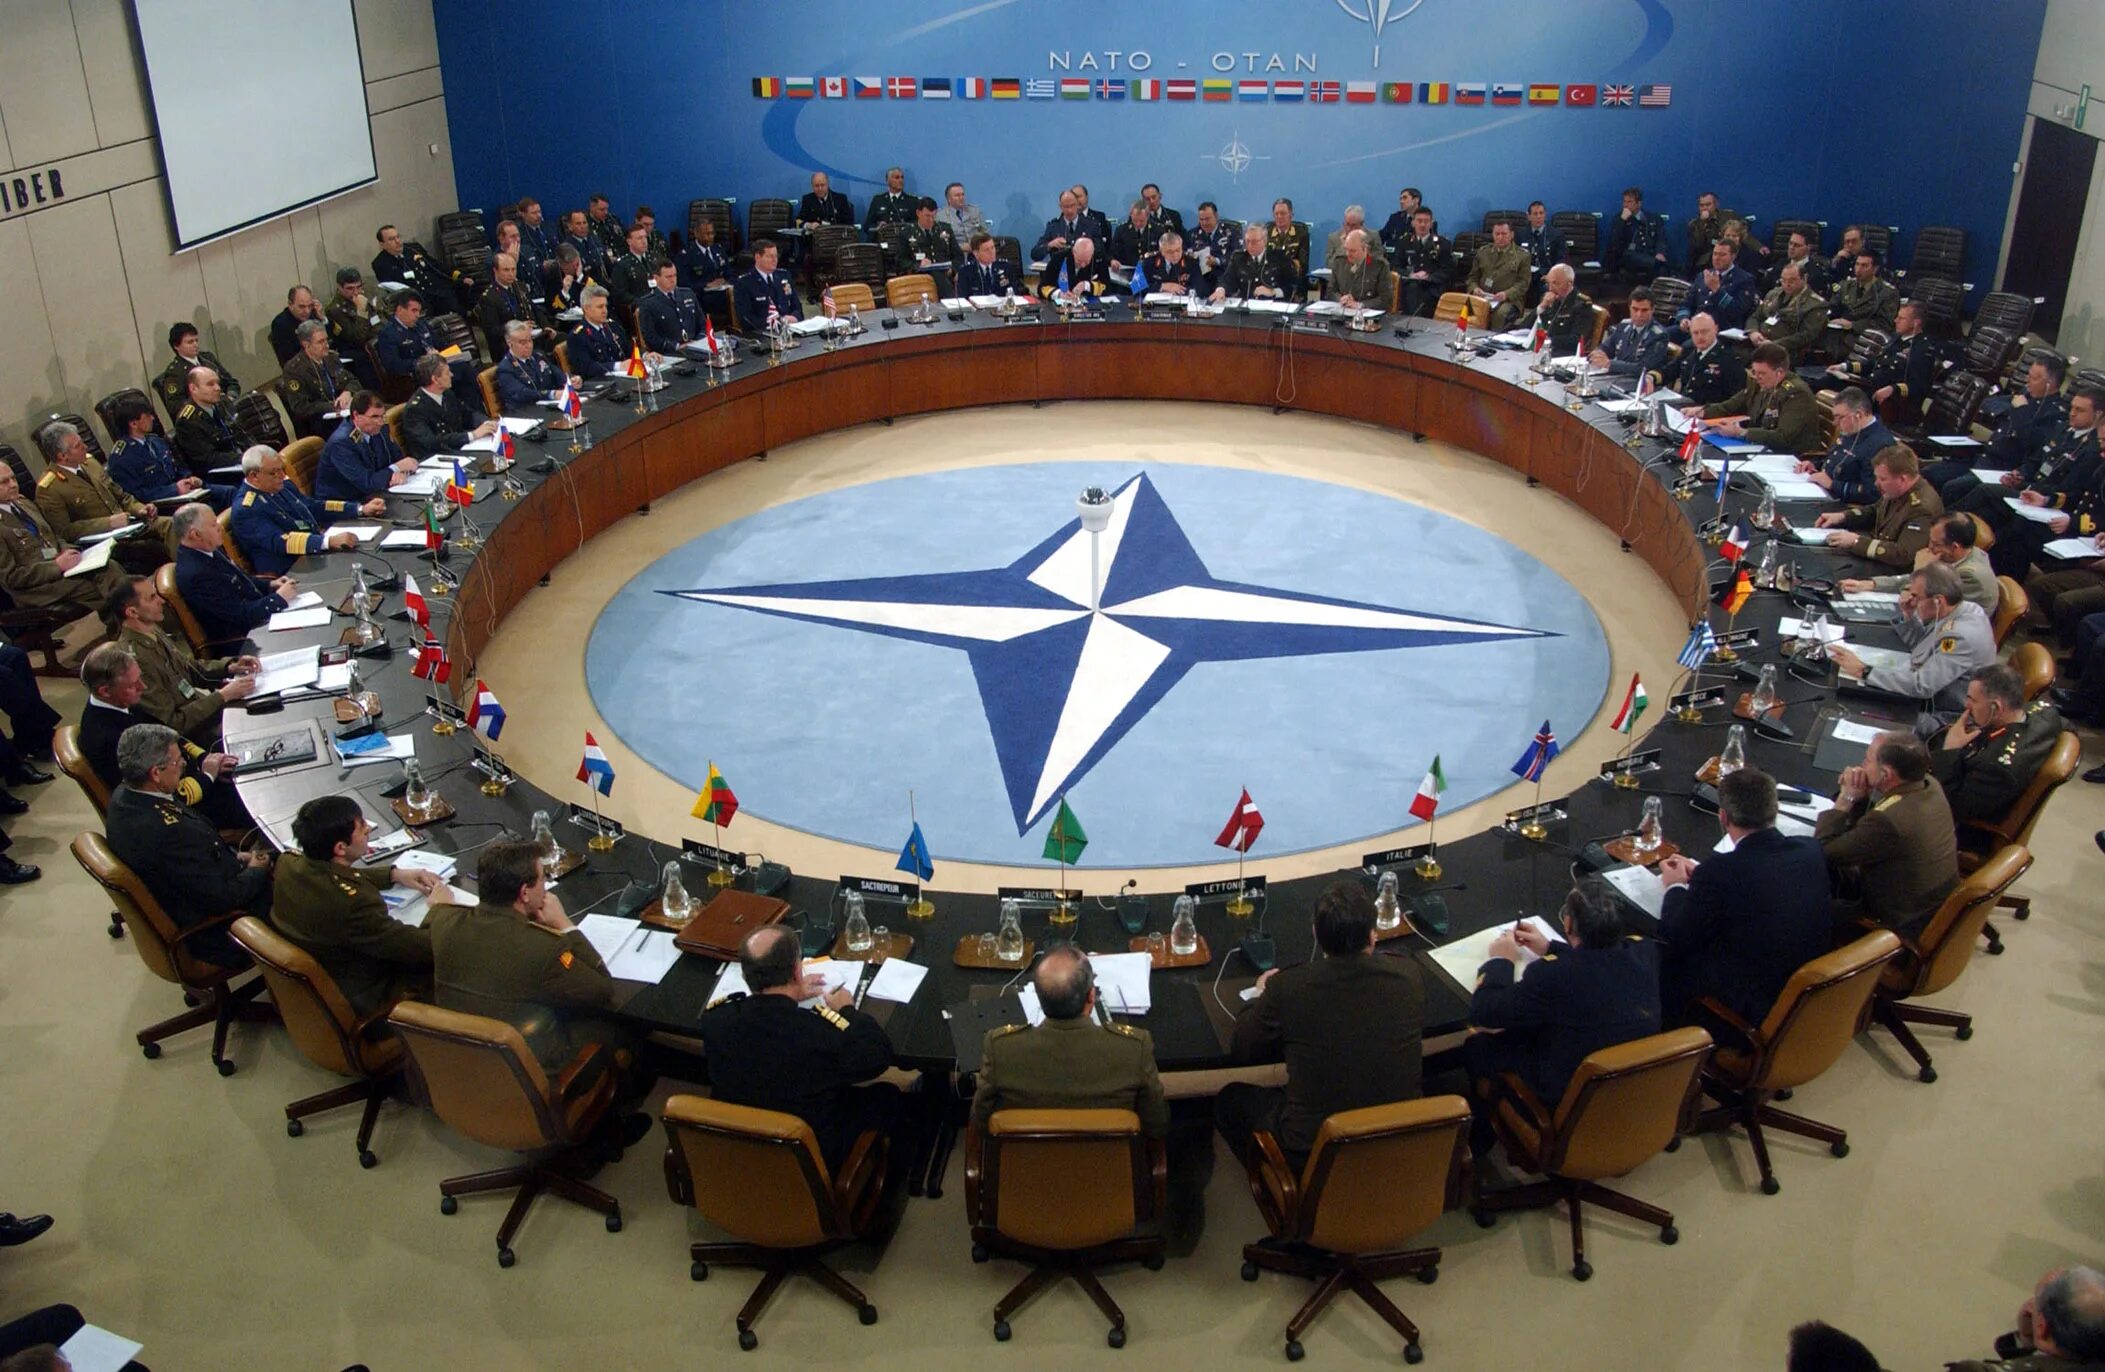 Североатлантический Альянс НАТО. НАТО North Atlantic Treaty Organization. Саммит НАТО В Мадриде. Образование Североатлантического Союза НАТО. Выступления нато